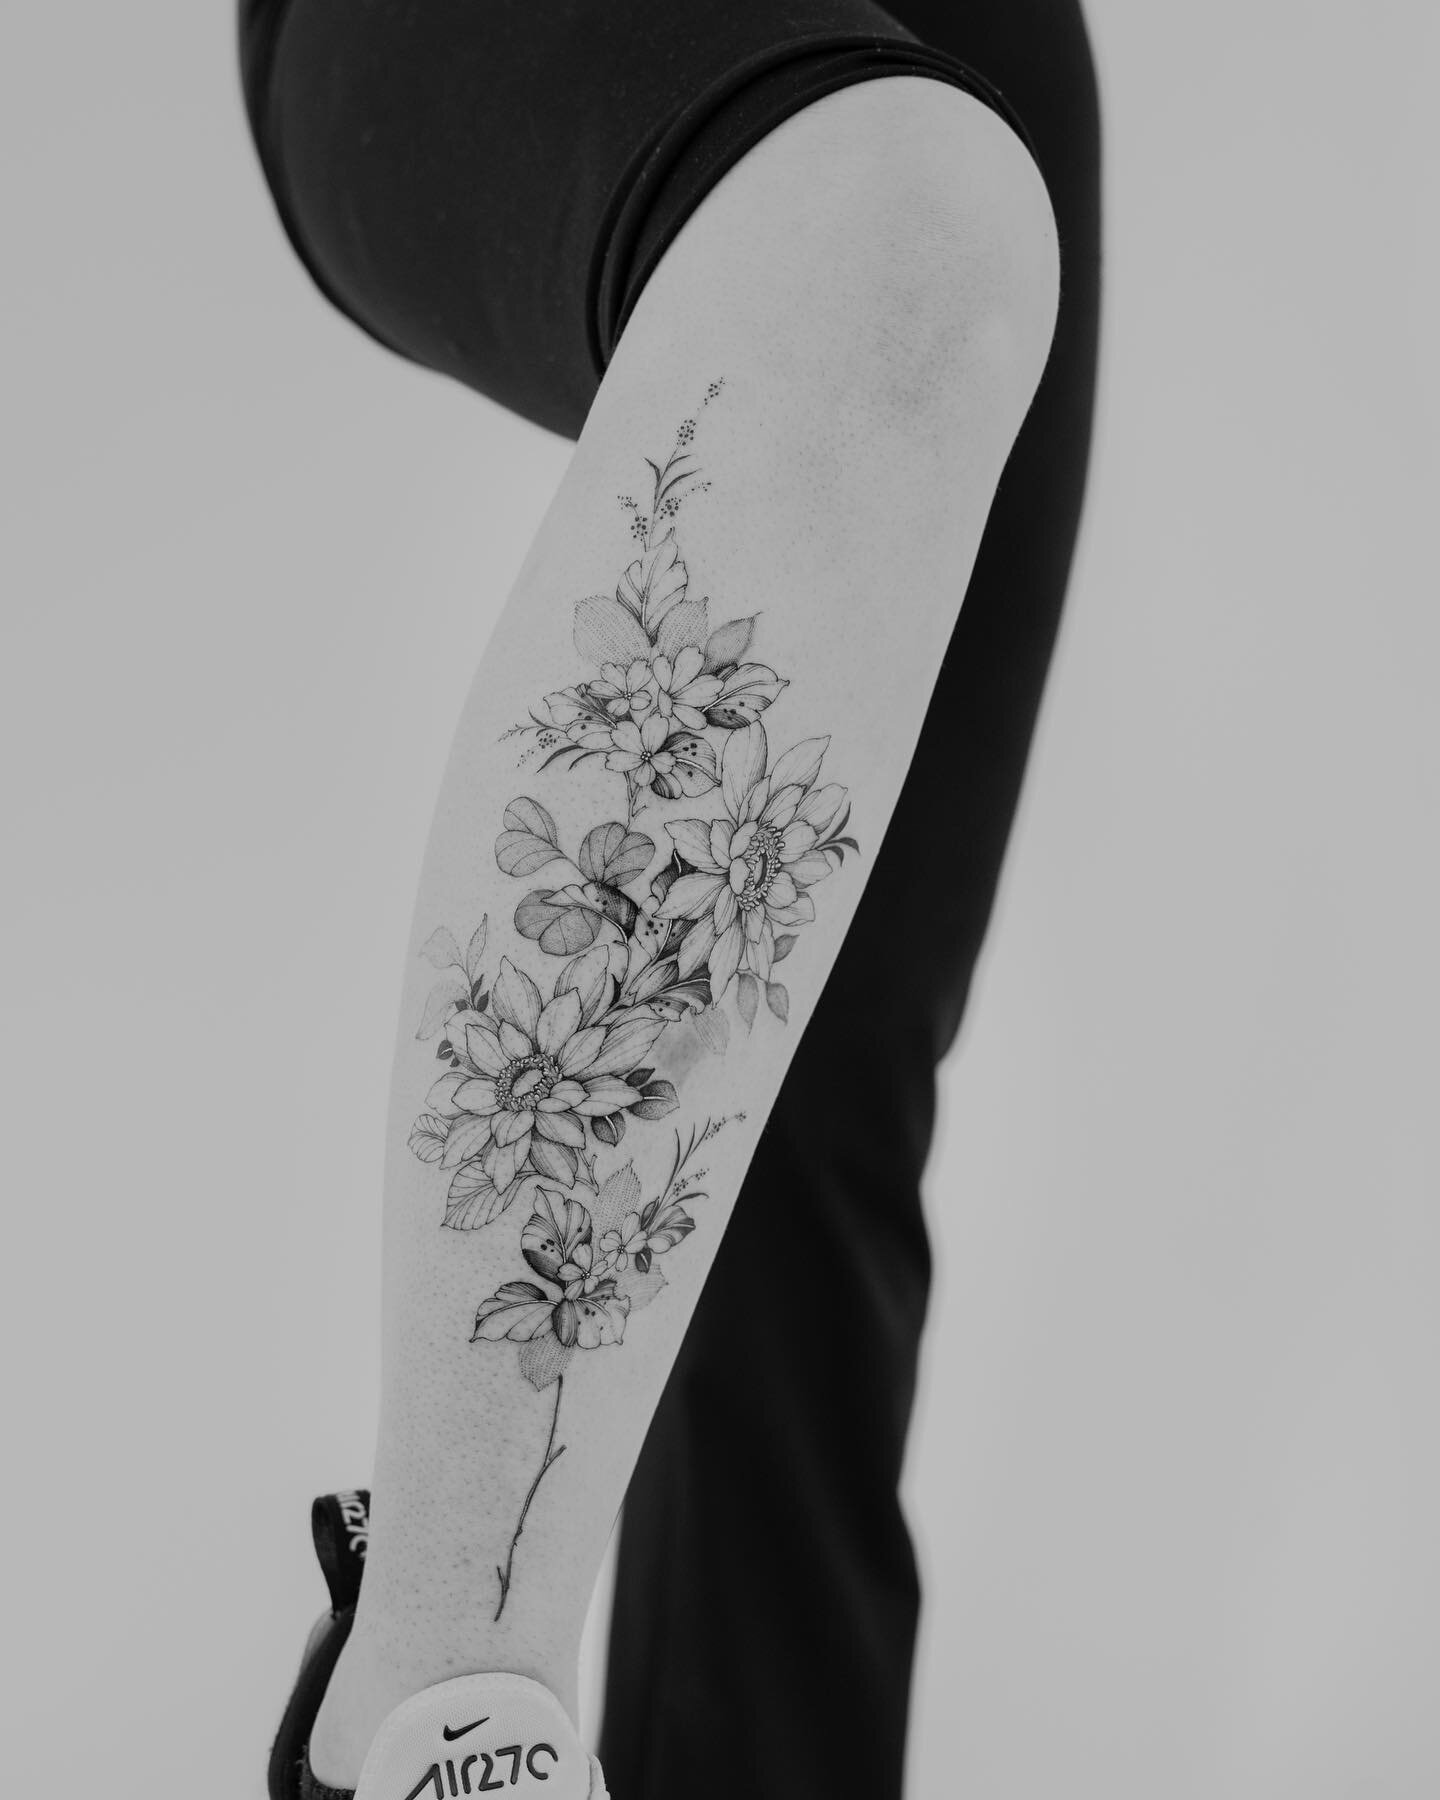 Autumn&rsquo;s third piece. Thanks for coming back 🙏🏼
.
.
.
.
.

 #tattoo #tattoos #finelinetattoos #frehandtattoo #tattoartist #finelinetattoo #fineline #torontotattoo #torontotattoos #torontotattooartist #floral #floraltattoos #flower tattoo #mon